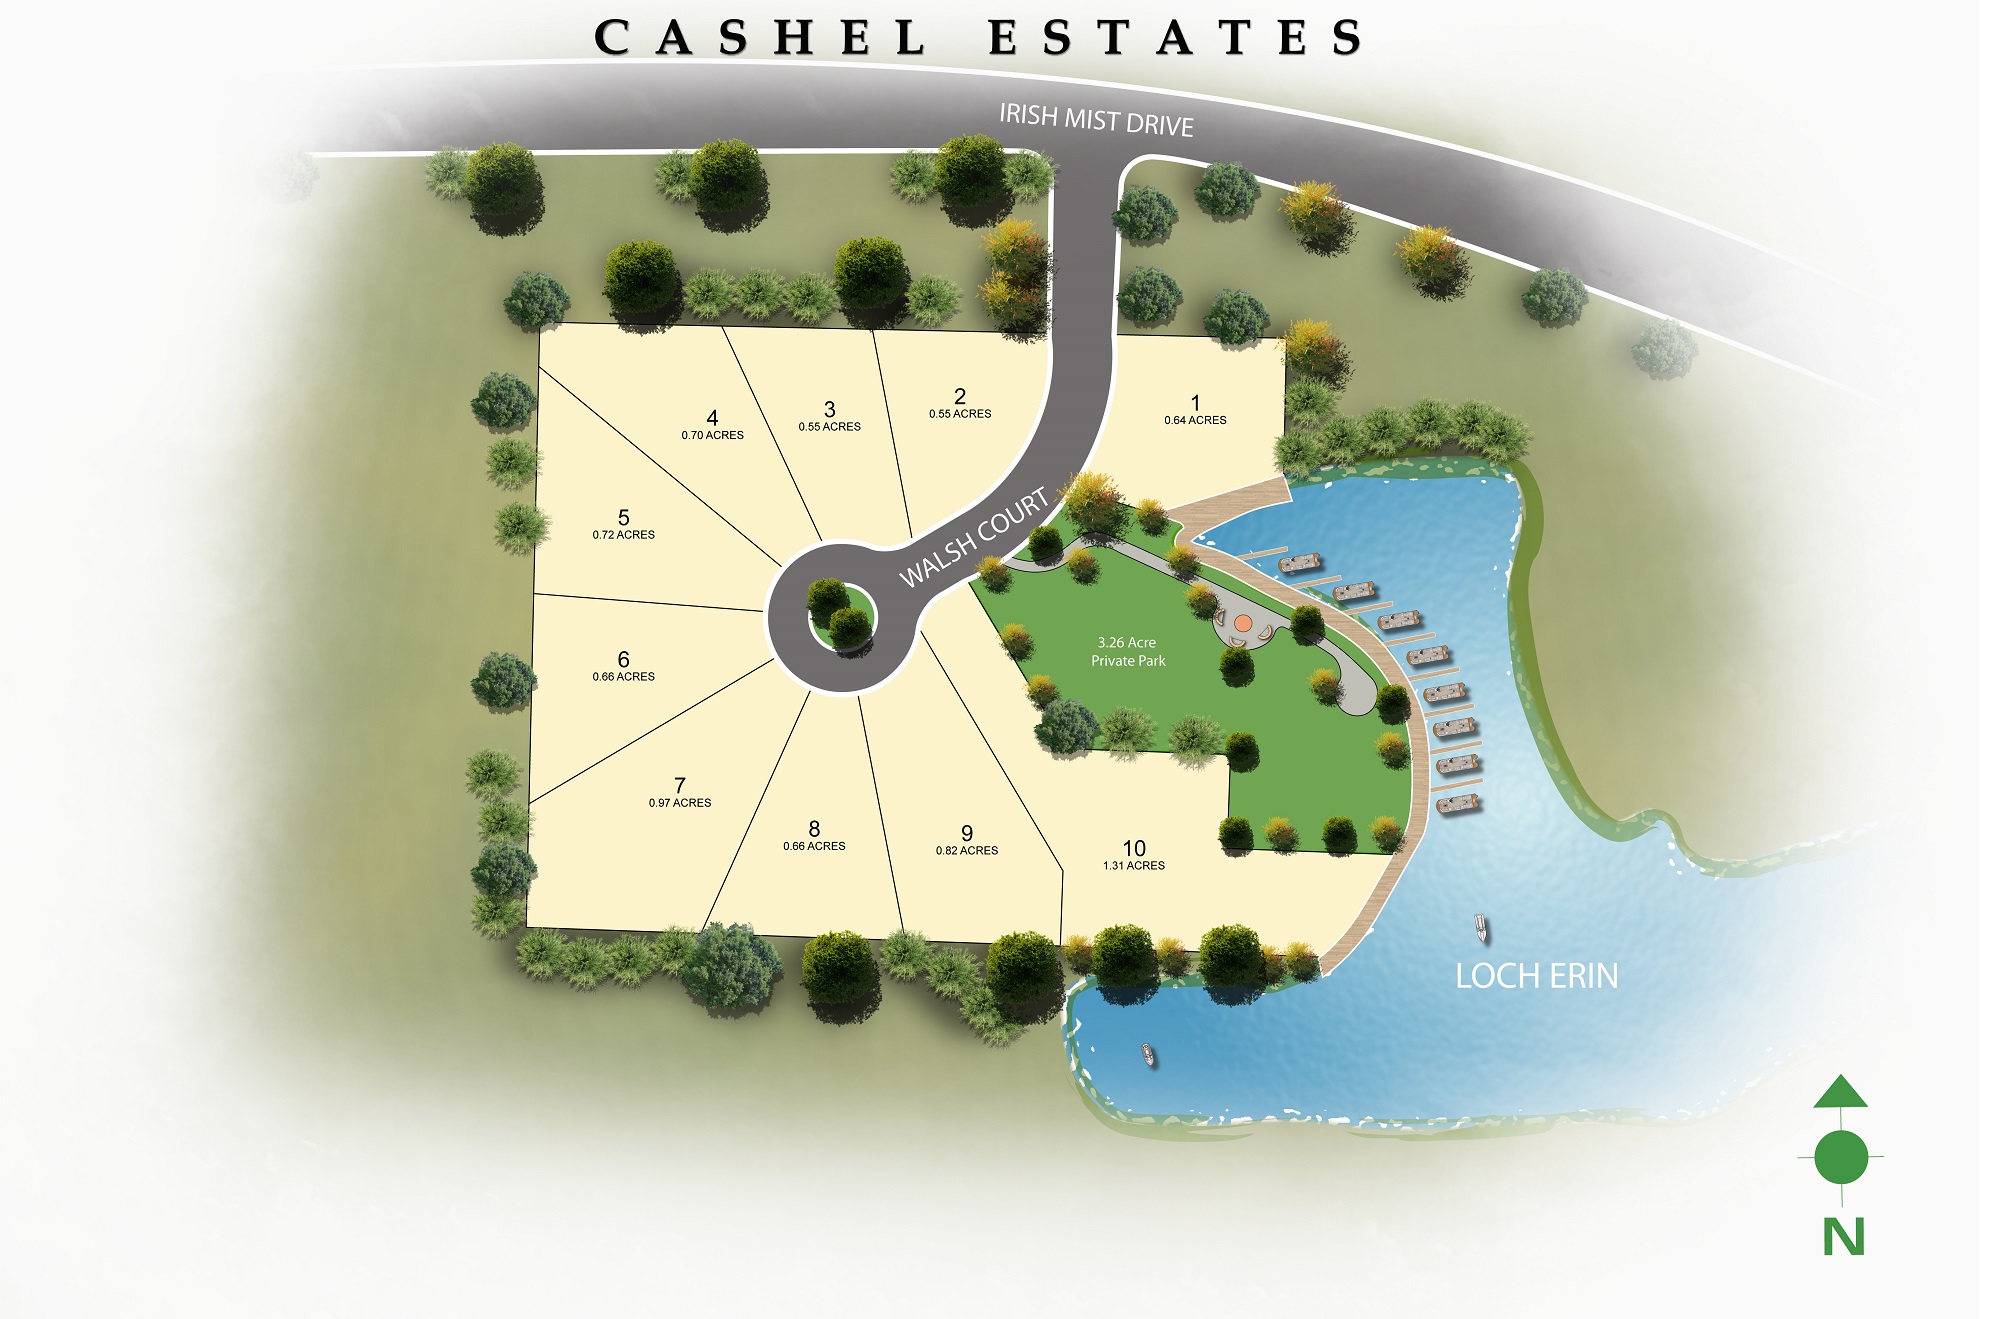 Cashel Estates - COMING SOON!